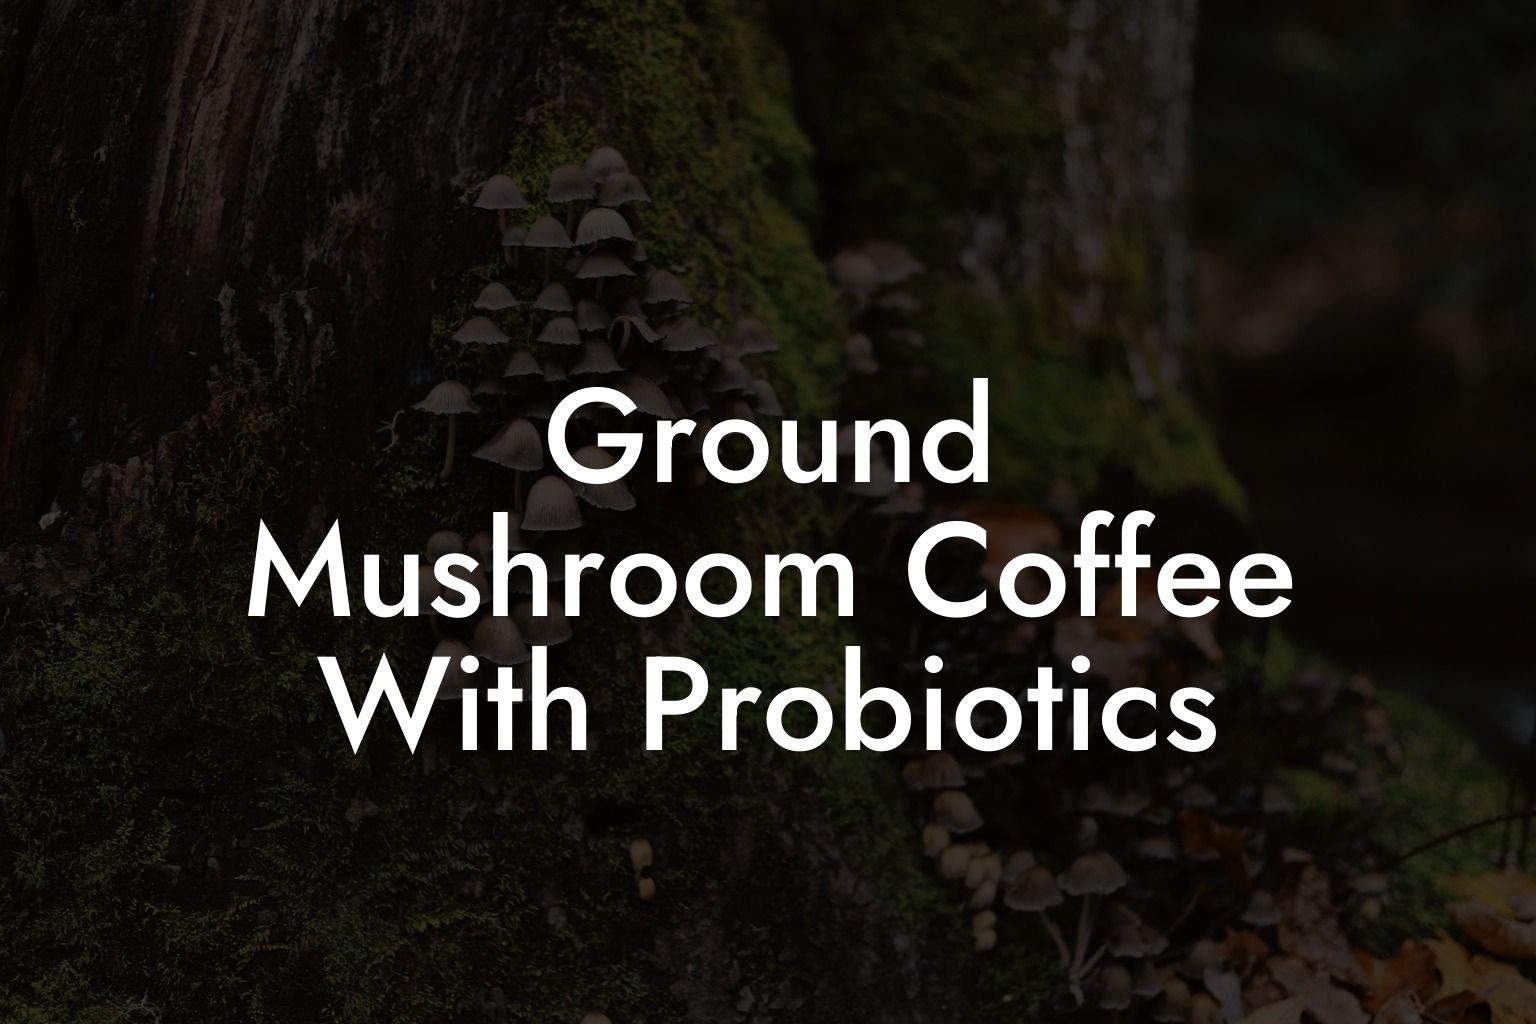 Ground Mushroom Coffee With Probiotics